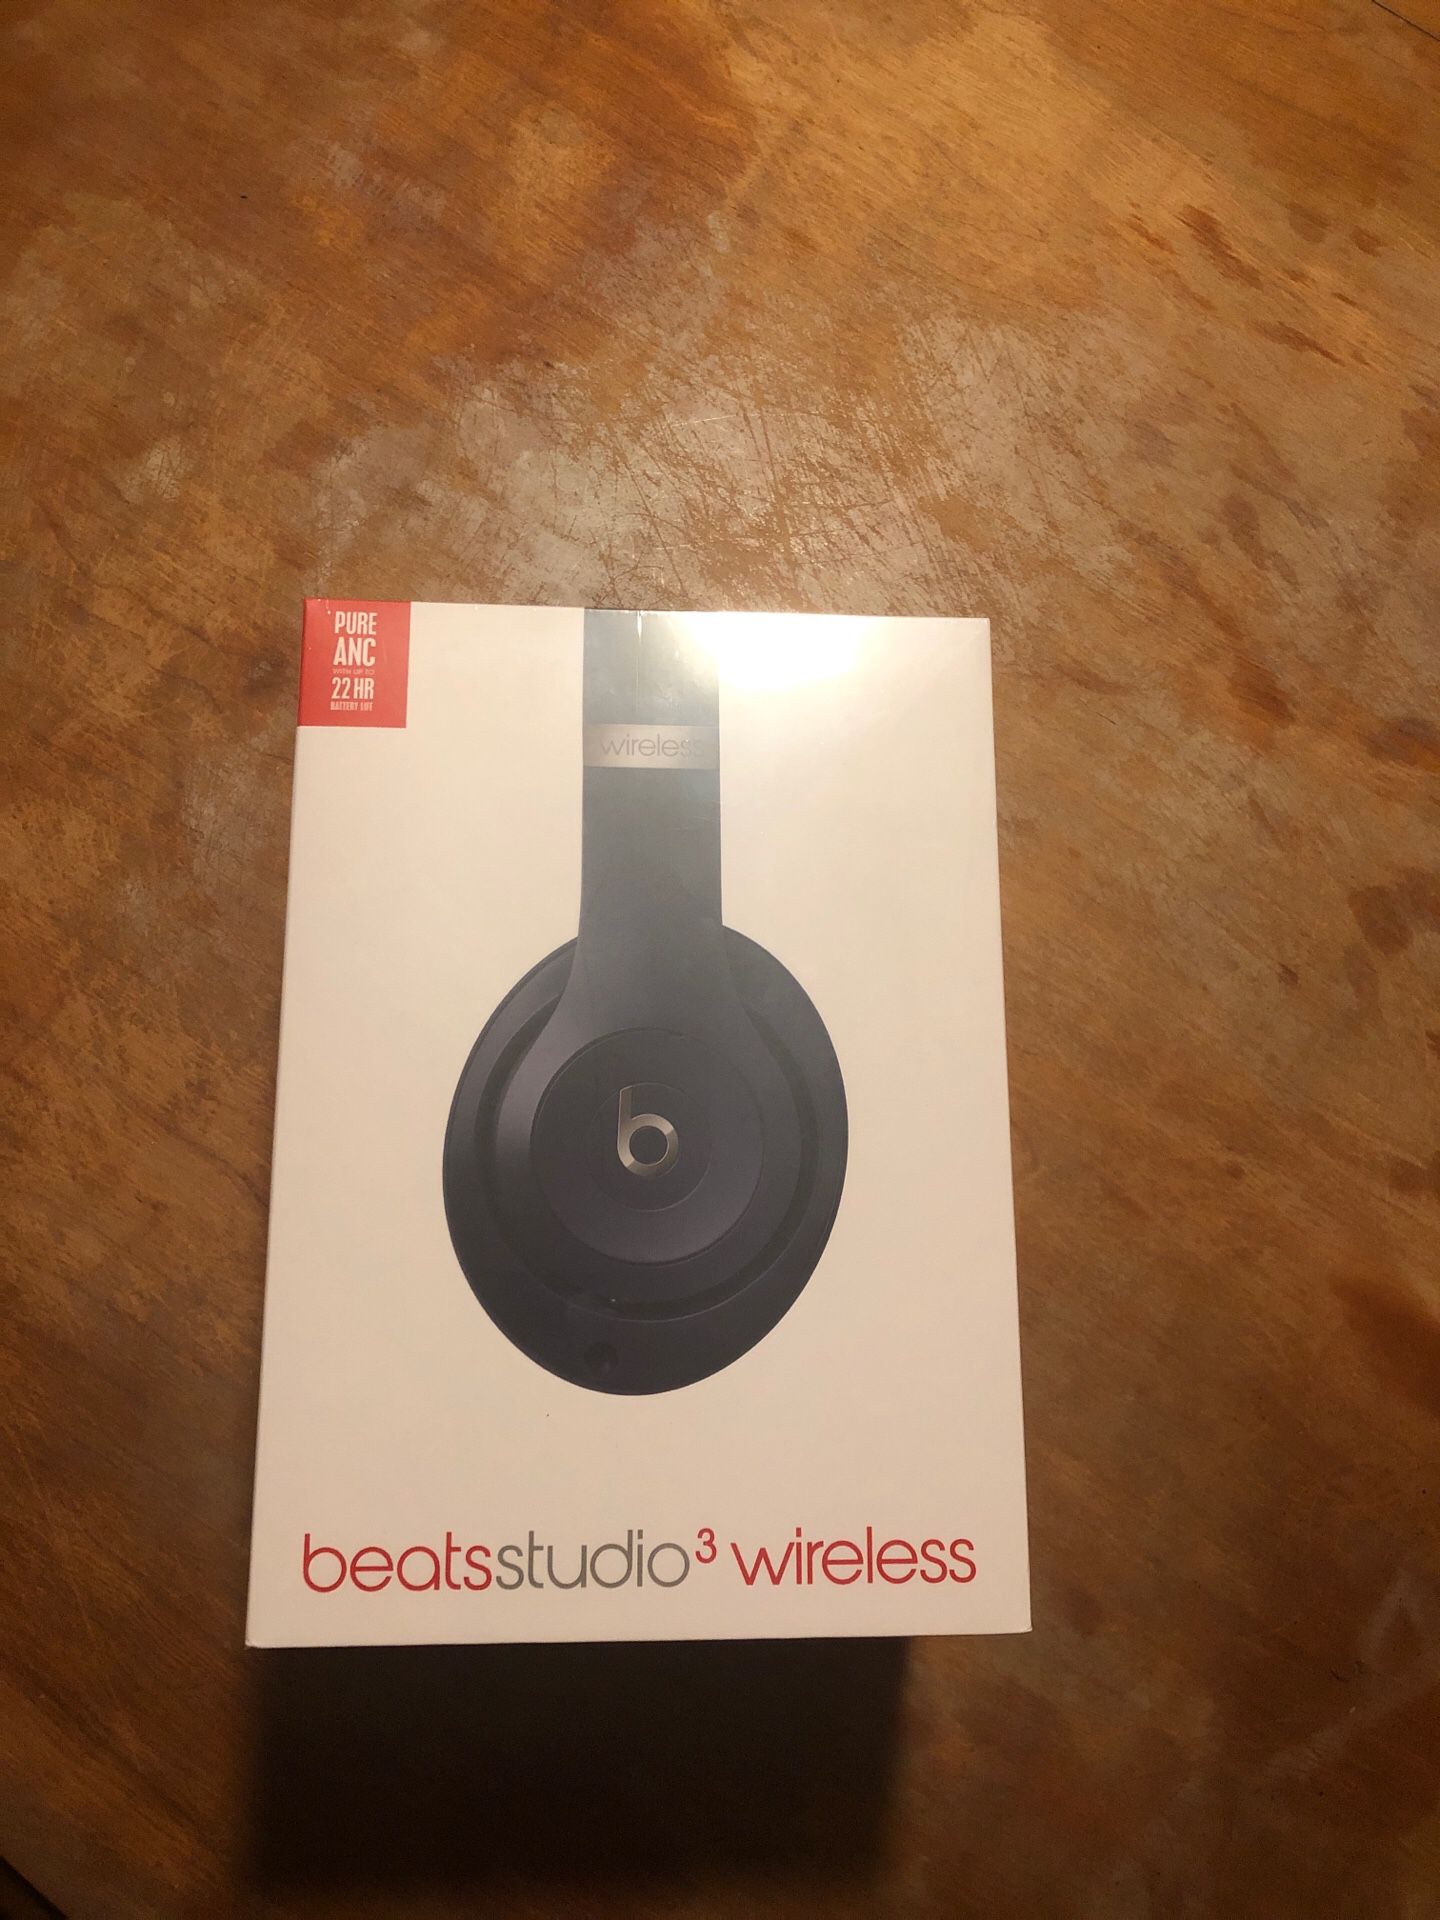 Beat Studio 3 wireless